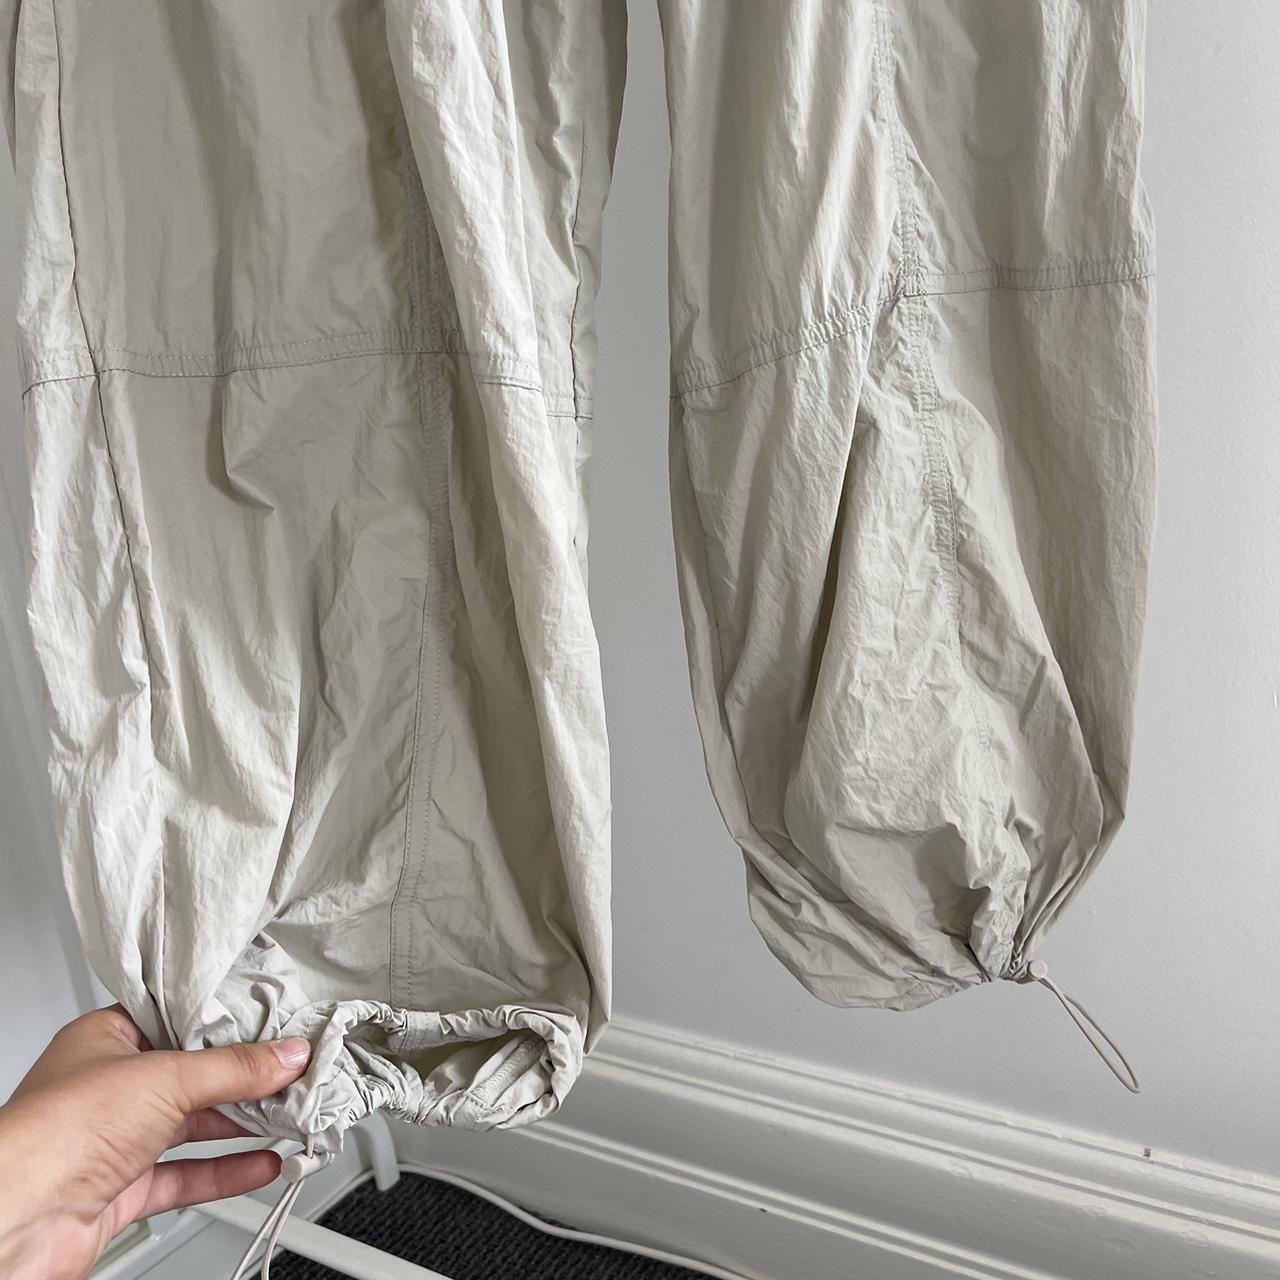 glassons khaki parachute pants size 8 - Depop